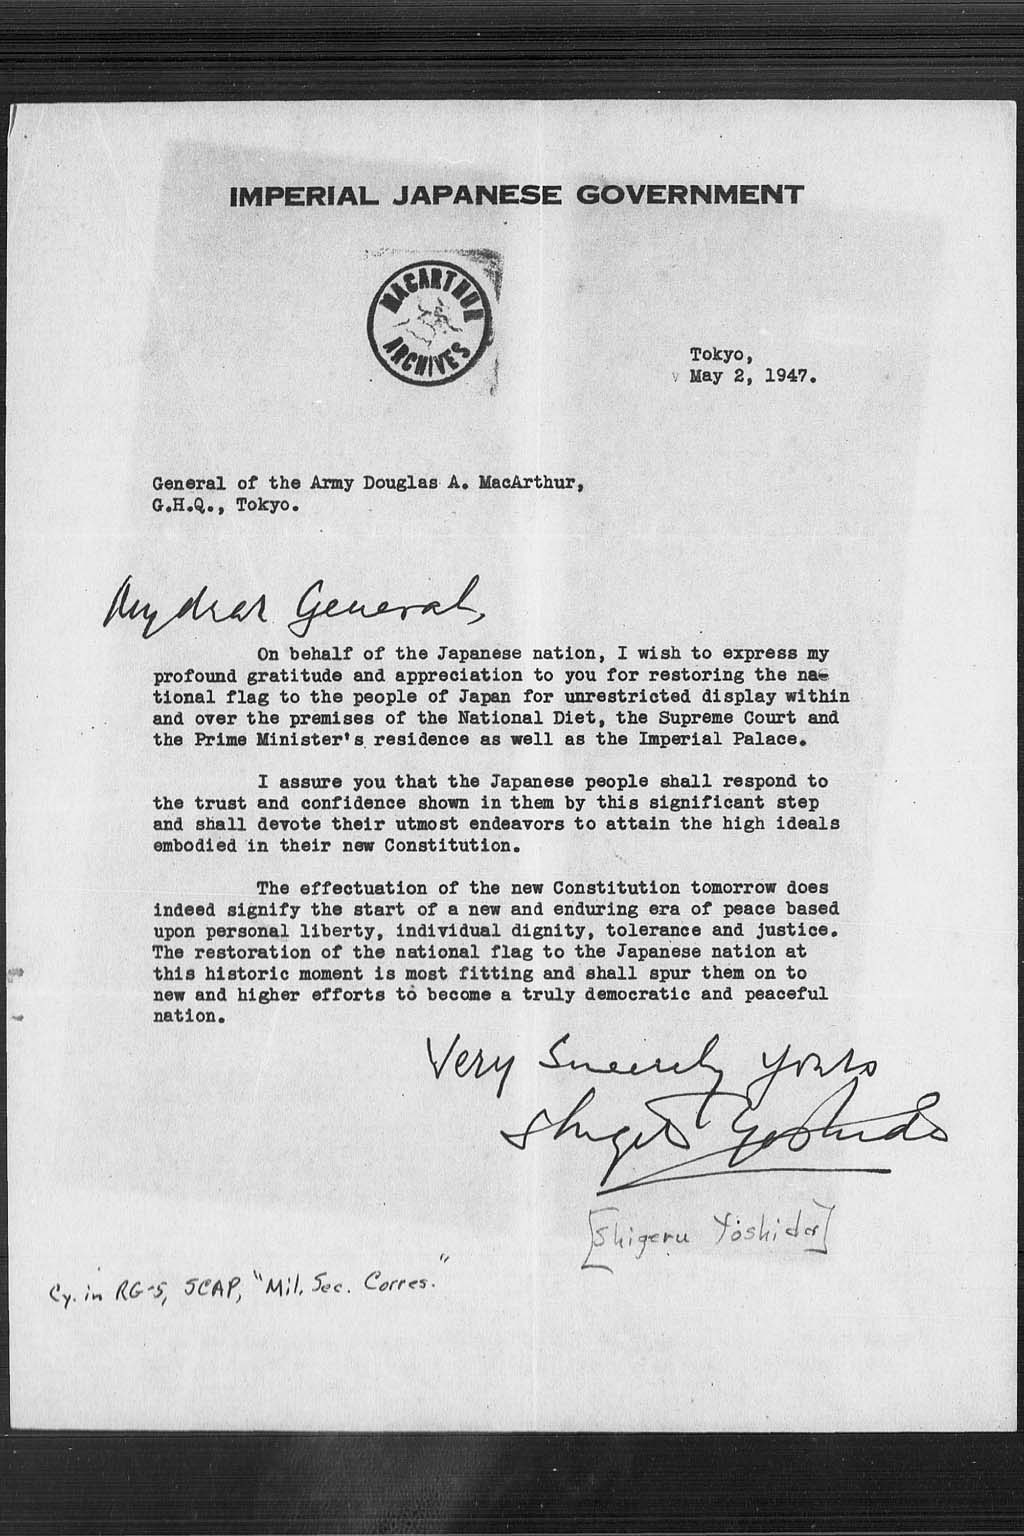 『Letter from Shigeru Yoshida to Genaral MacArthur dated May 2, 1947』(拡大画像)